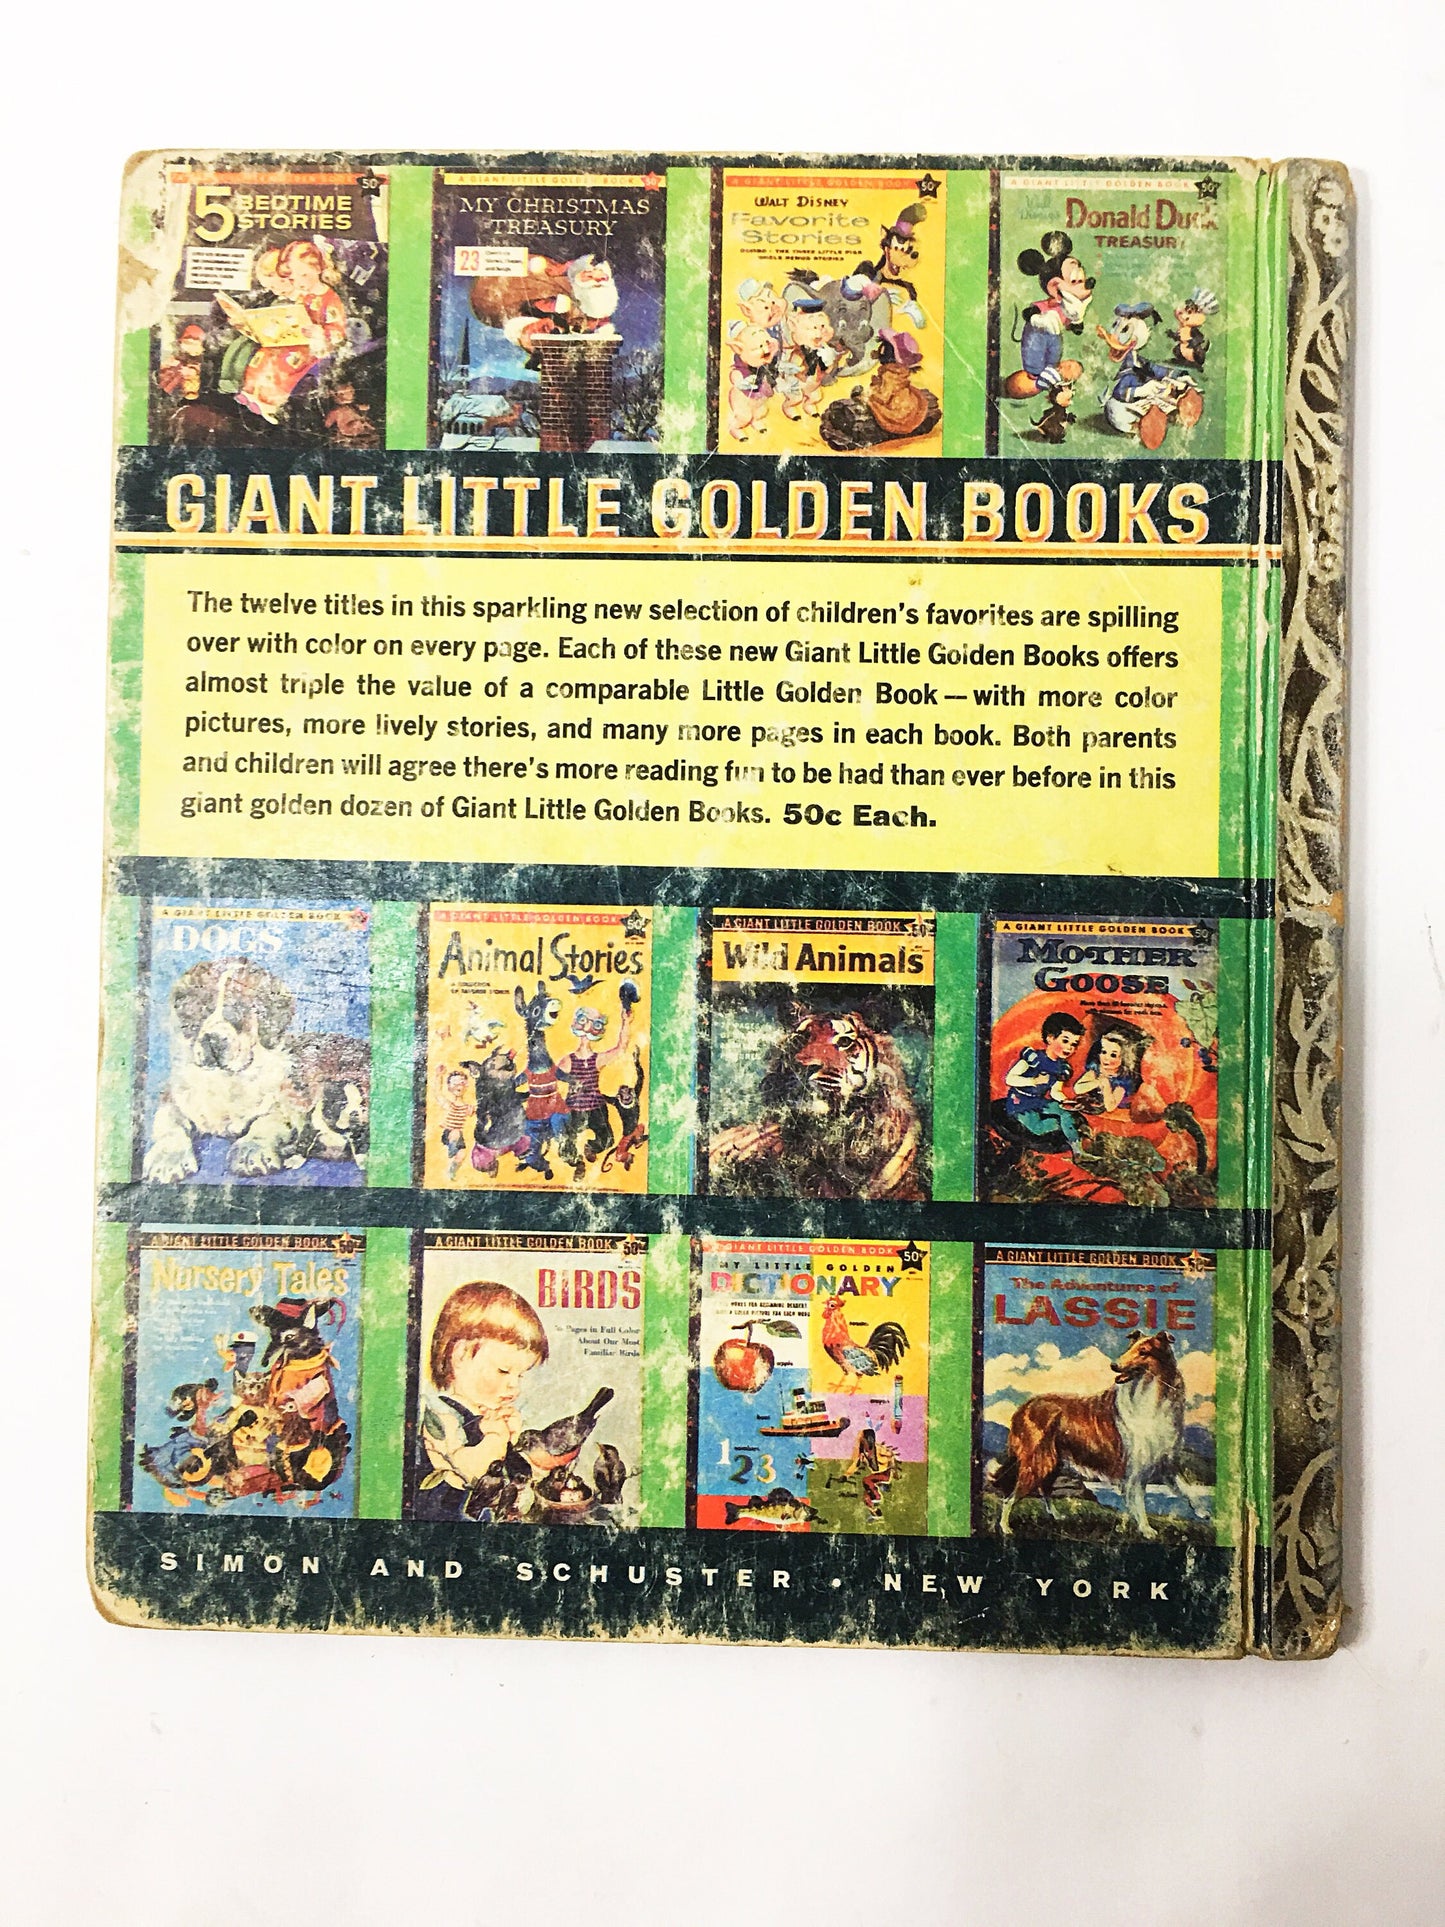 1952 Woody Woodpecker Joins the Circus. Warner Brothers Little Golden Book. Walter Lantz. First Edition children's book. Golden Press